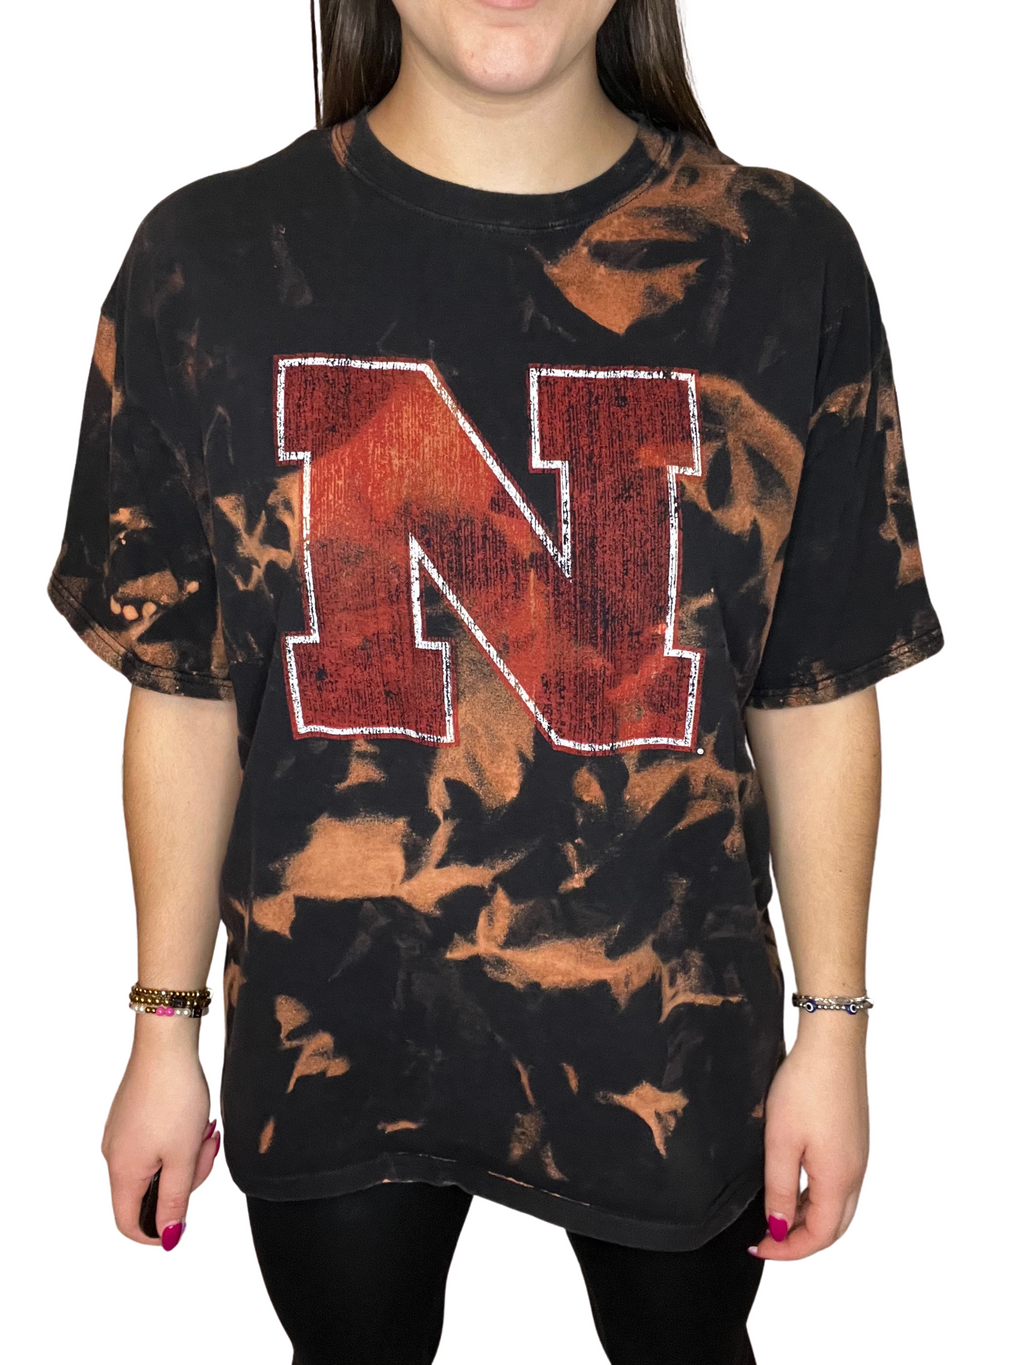 University of Nebraska Bleached Shirt